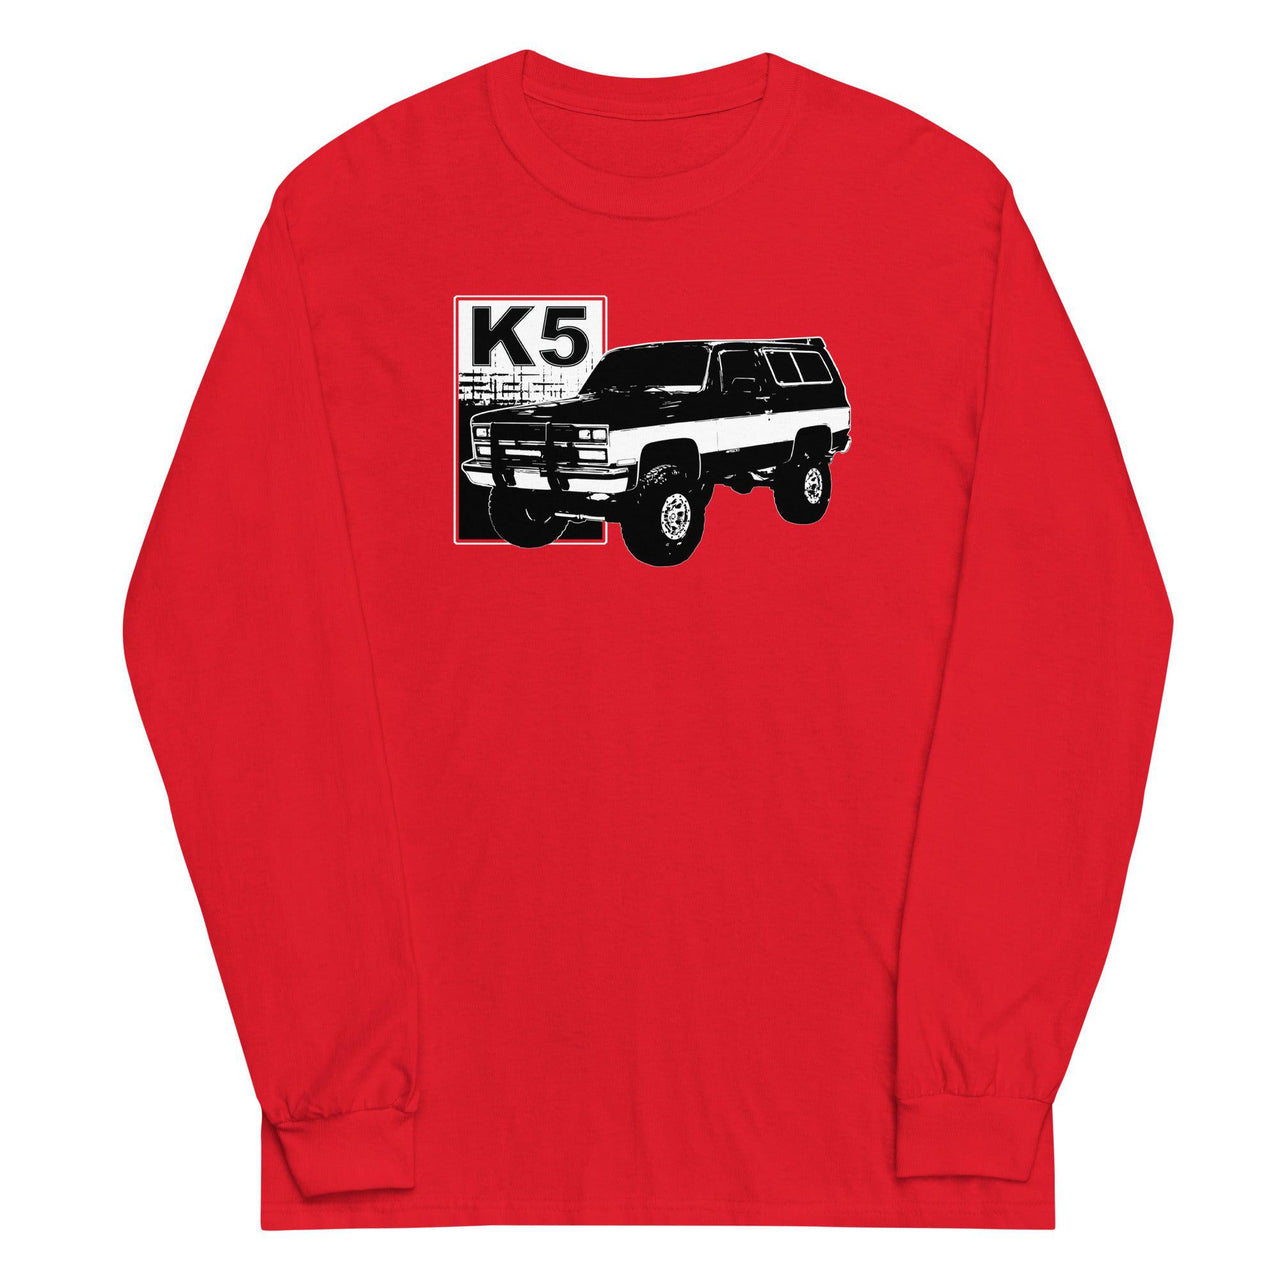 K5 Blazer Long Sleeve T-Shirt in red